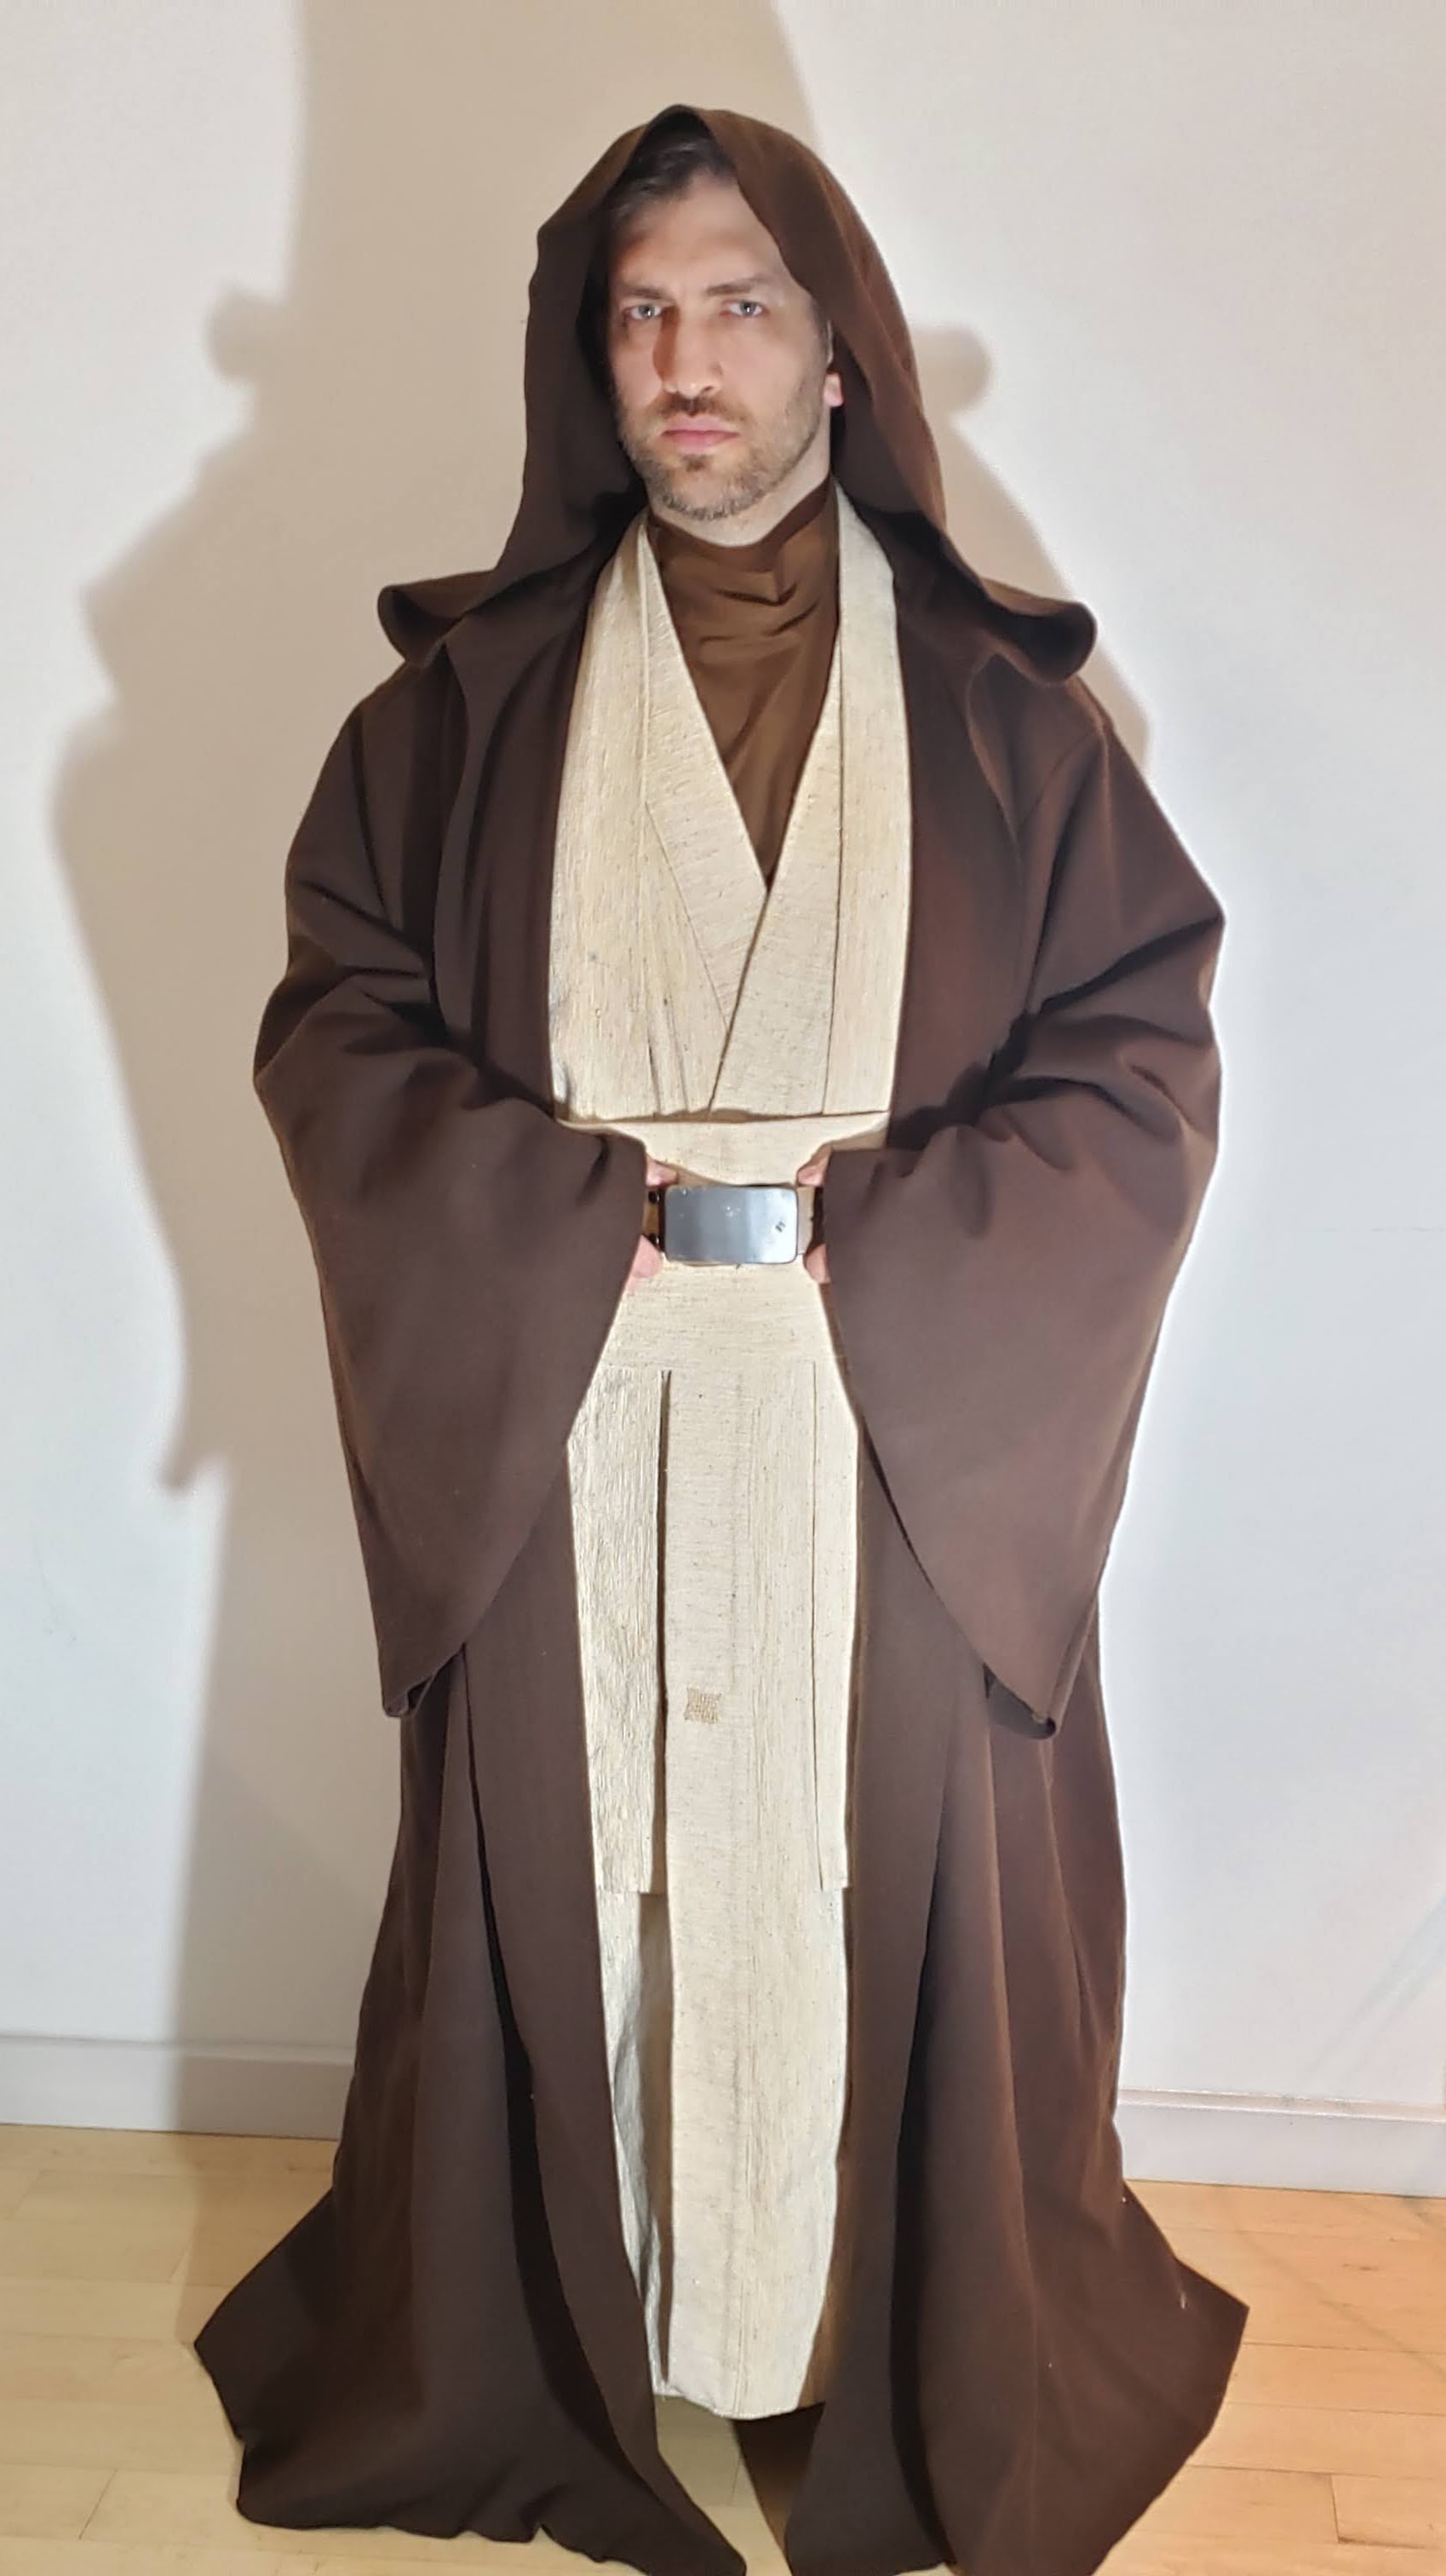 Ben Kenobi proto (24).jpg